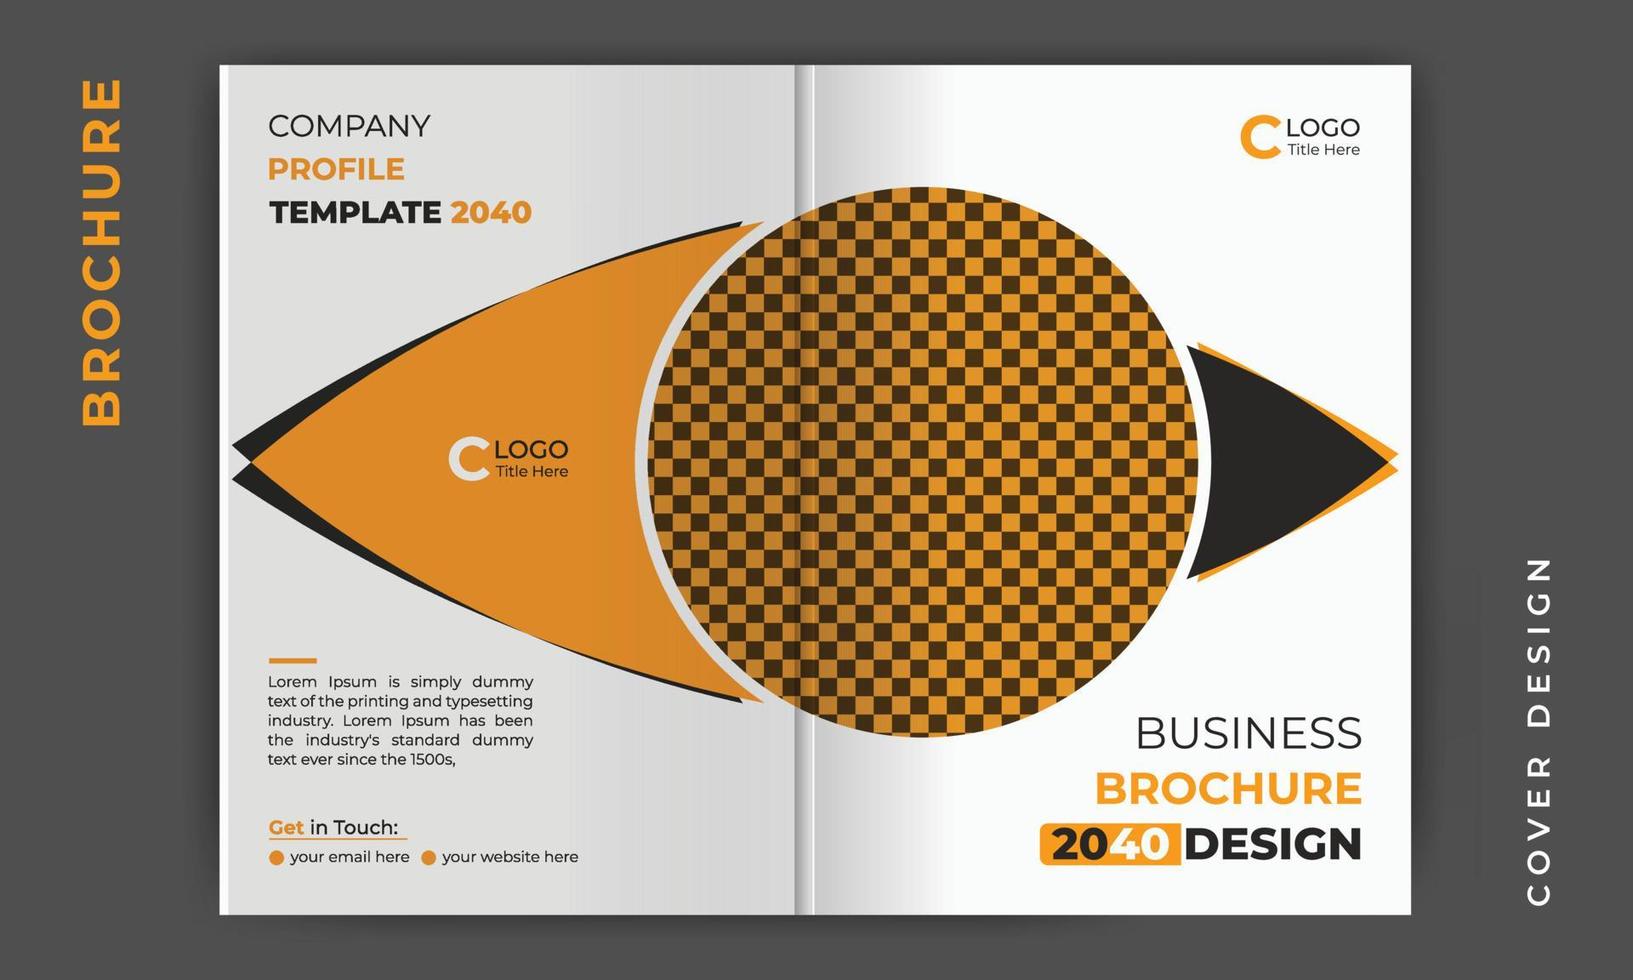 modelo de perfil de empresa corporativa ou layout de design de capa de brochura de negócios vetor